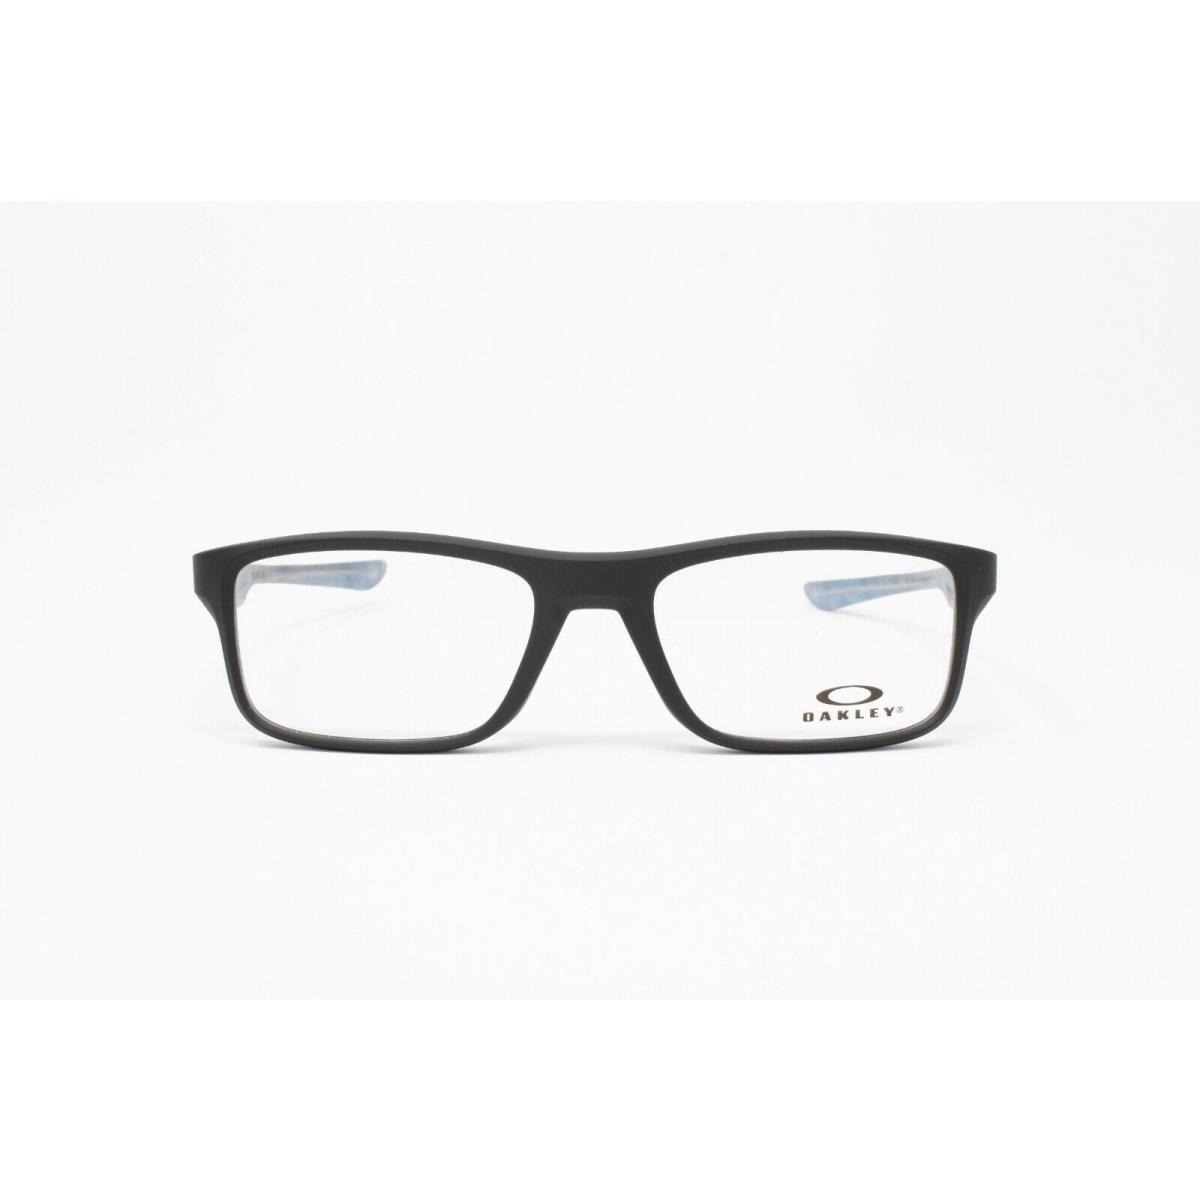 Oakley Optical Plank 2.0 OX8081 01 Satin Black Eyeglasses 53mm Frames RX